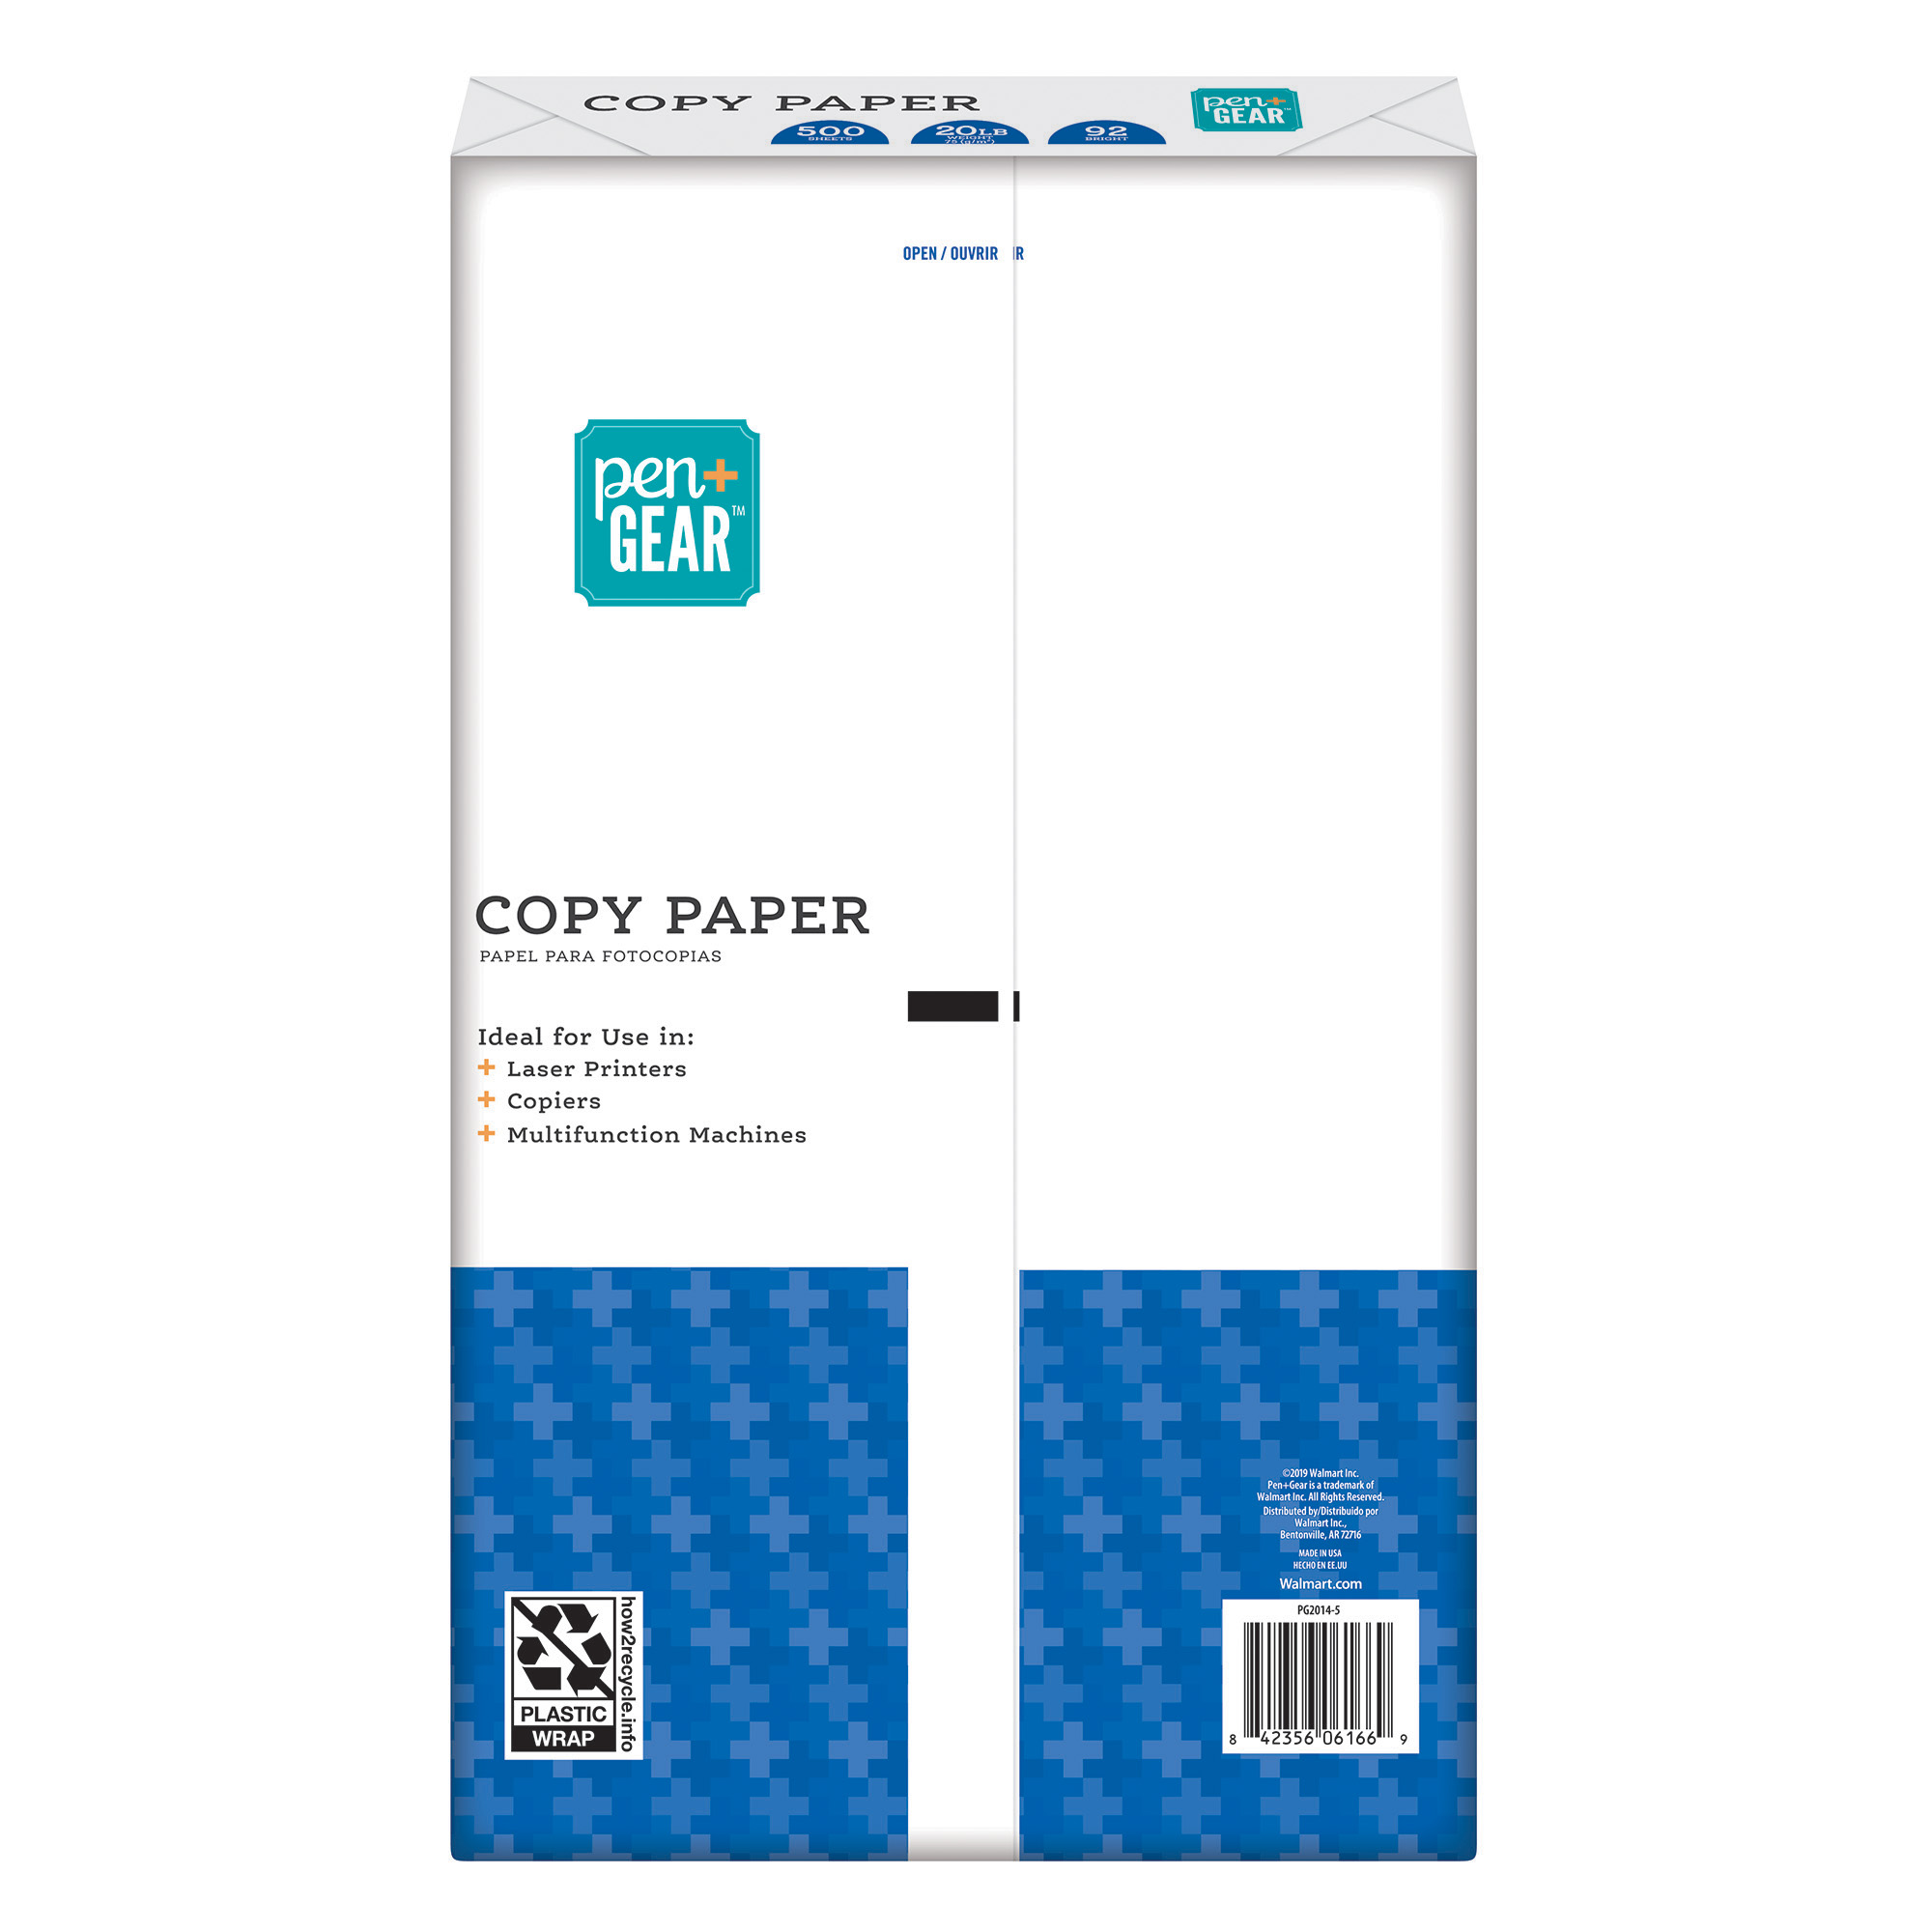 Pen+Gear Copy Paper, 8.5" x 14", Legal Size, 92 Bright, White, 20 lb., 1 Ream (500 Sheets) - image 4 of 8